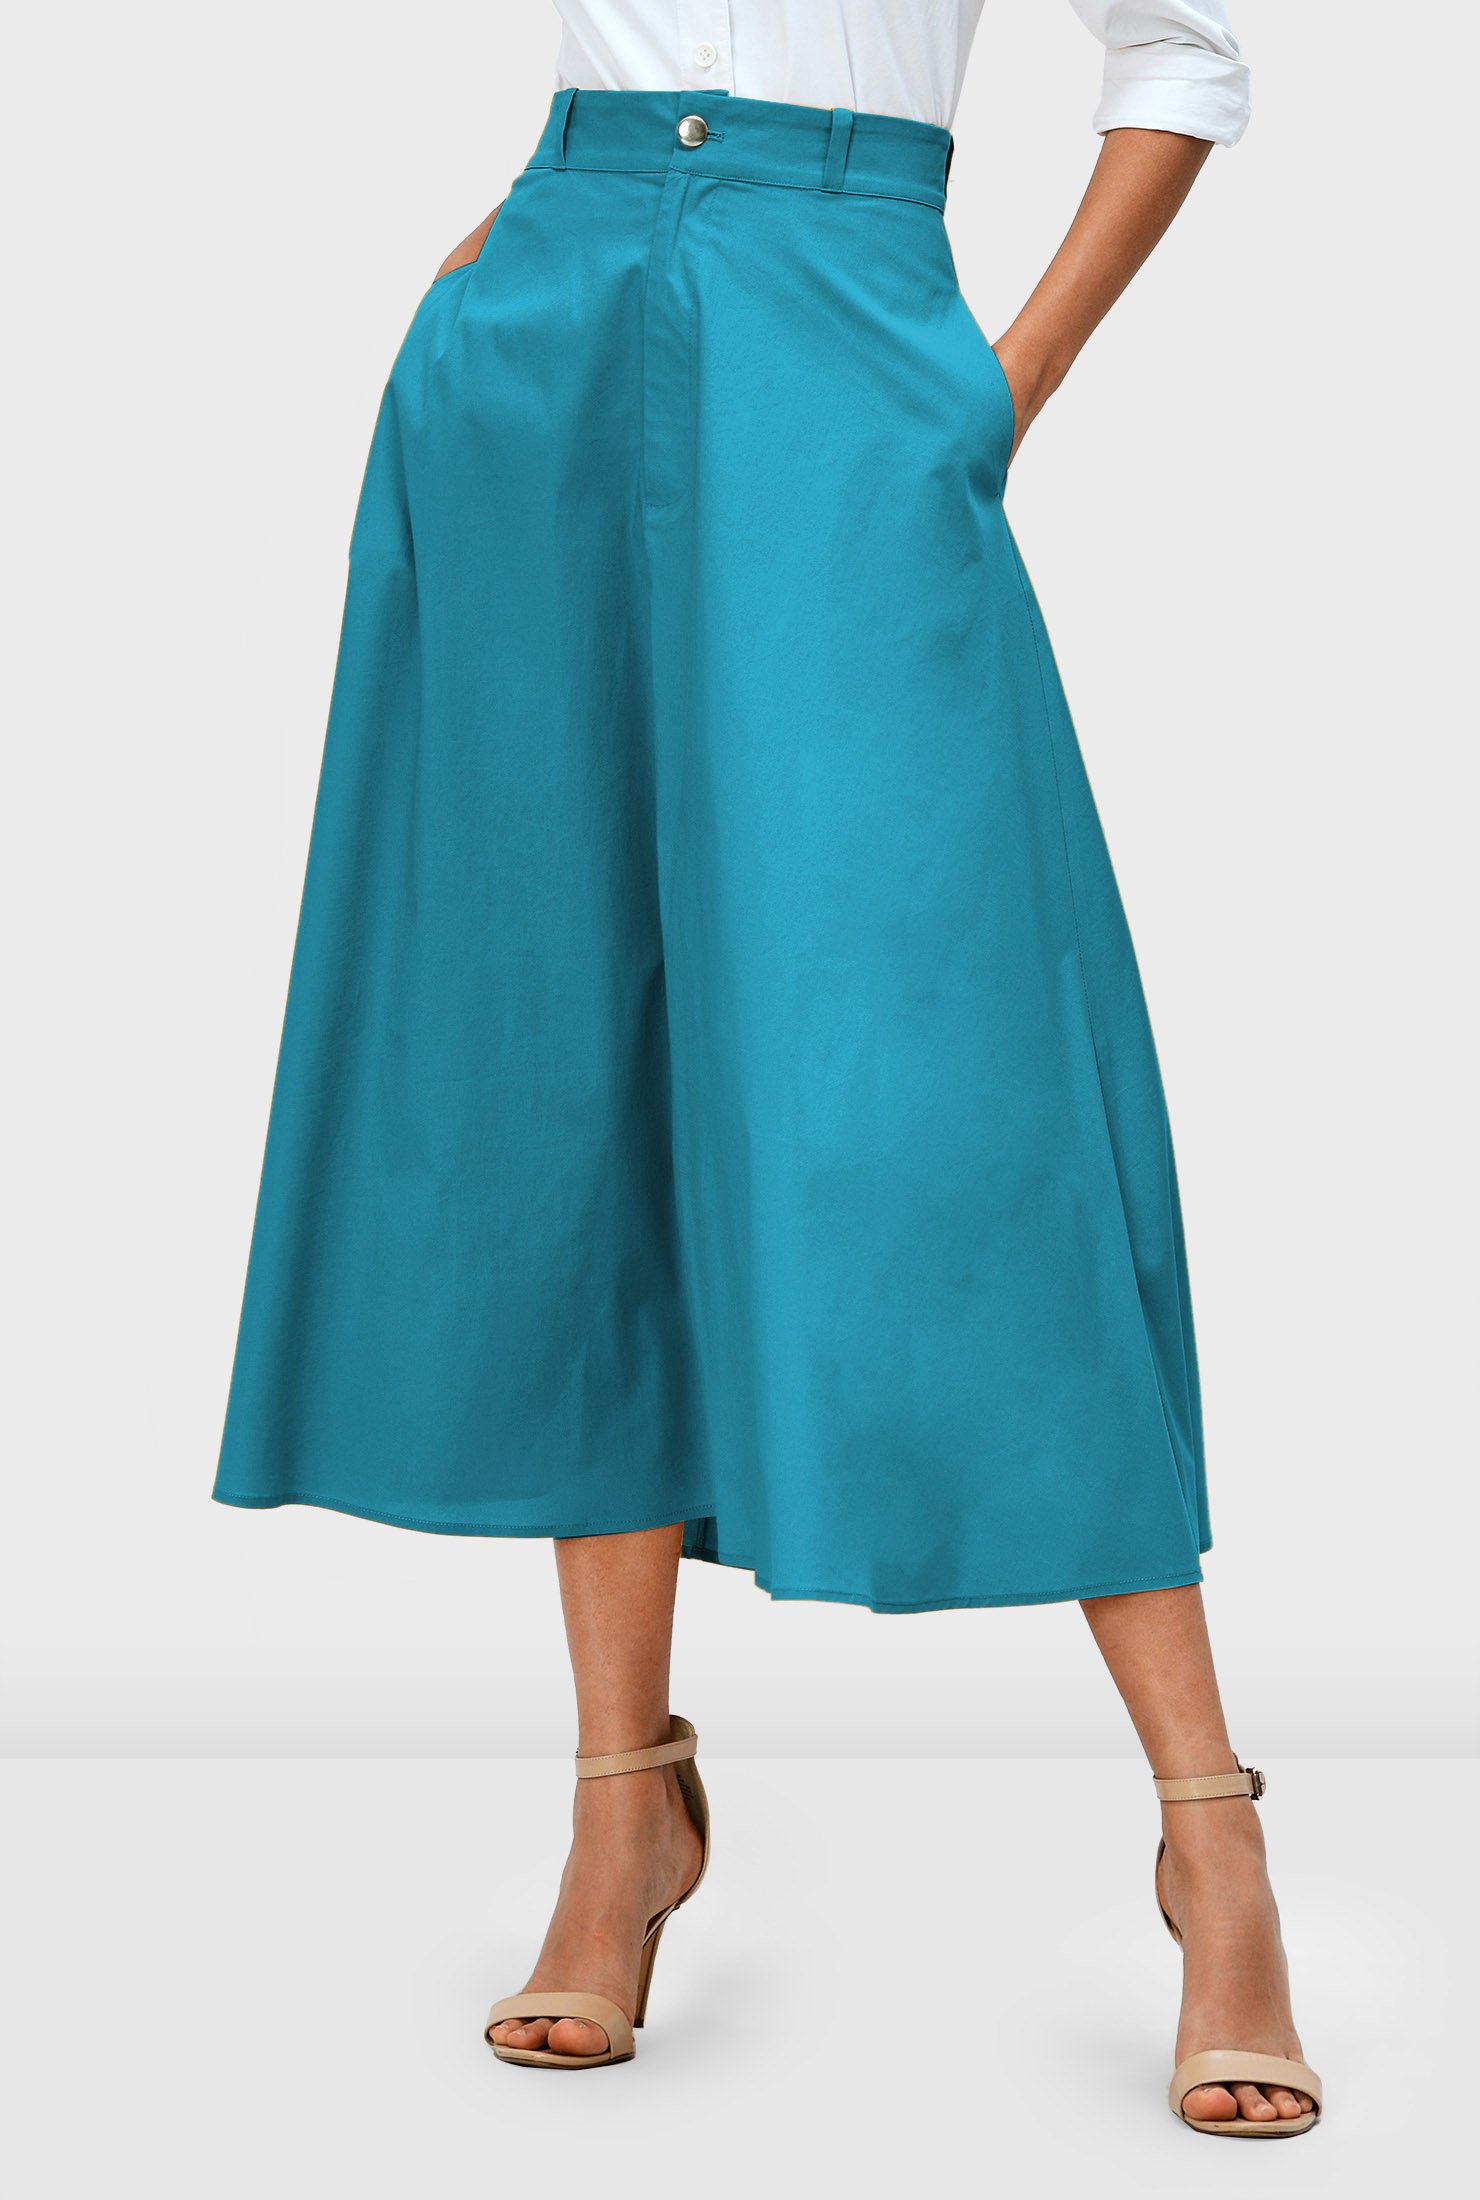 Shop Cotton poplin full flare skirt | eShakti